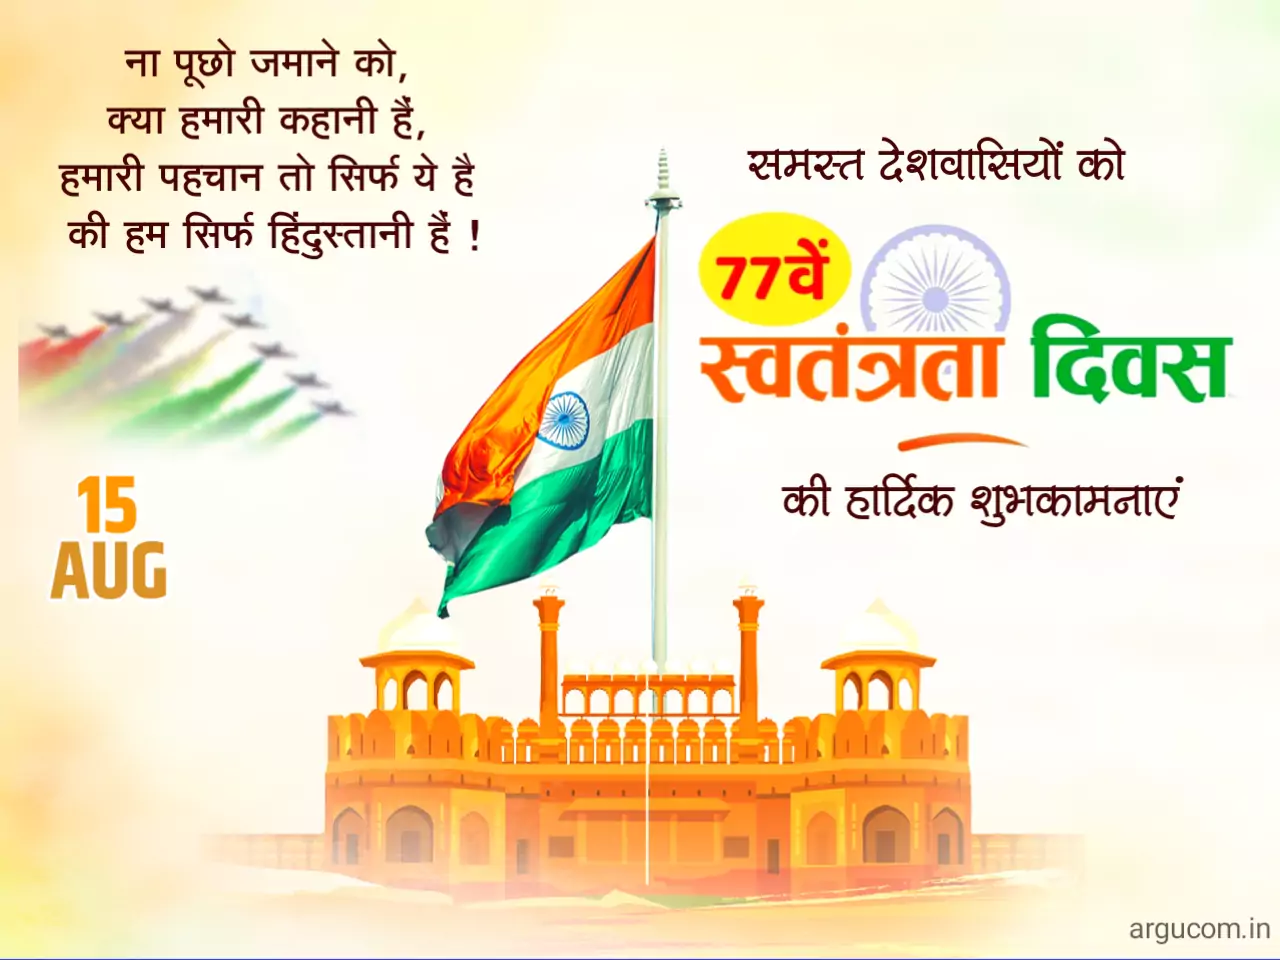 Independence day shayari in hindi, स्वतंत्रता दिवस शायरी हिंदी